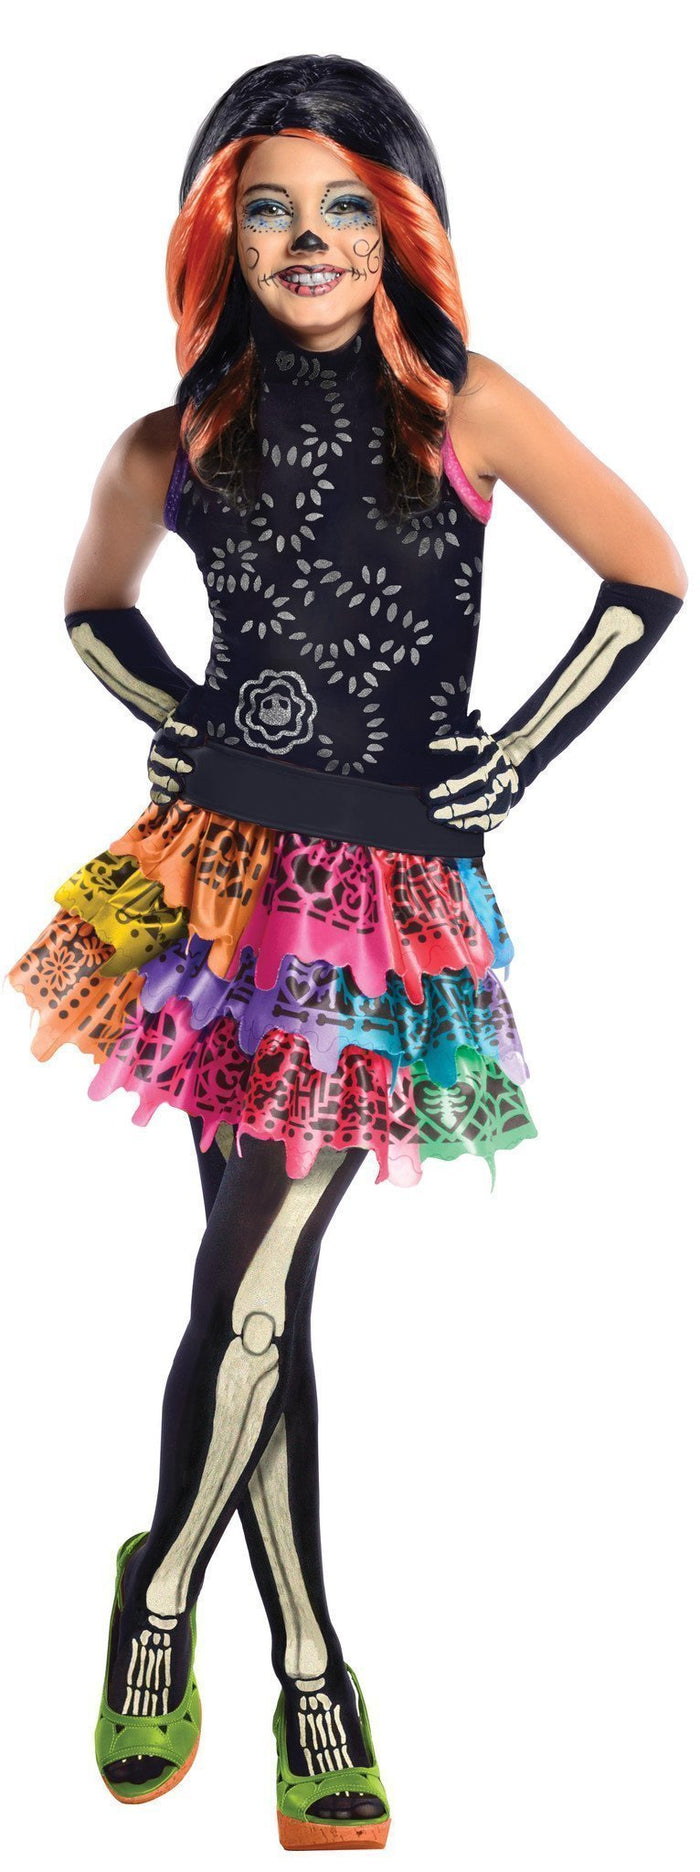 Skelita Calaveras Costume for Kids - Monster High